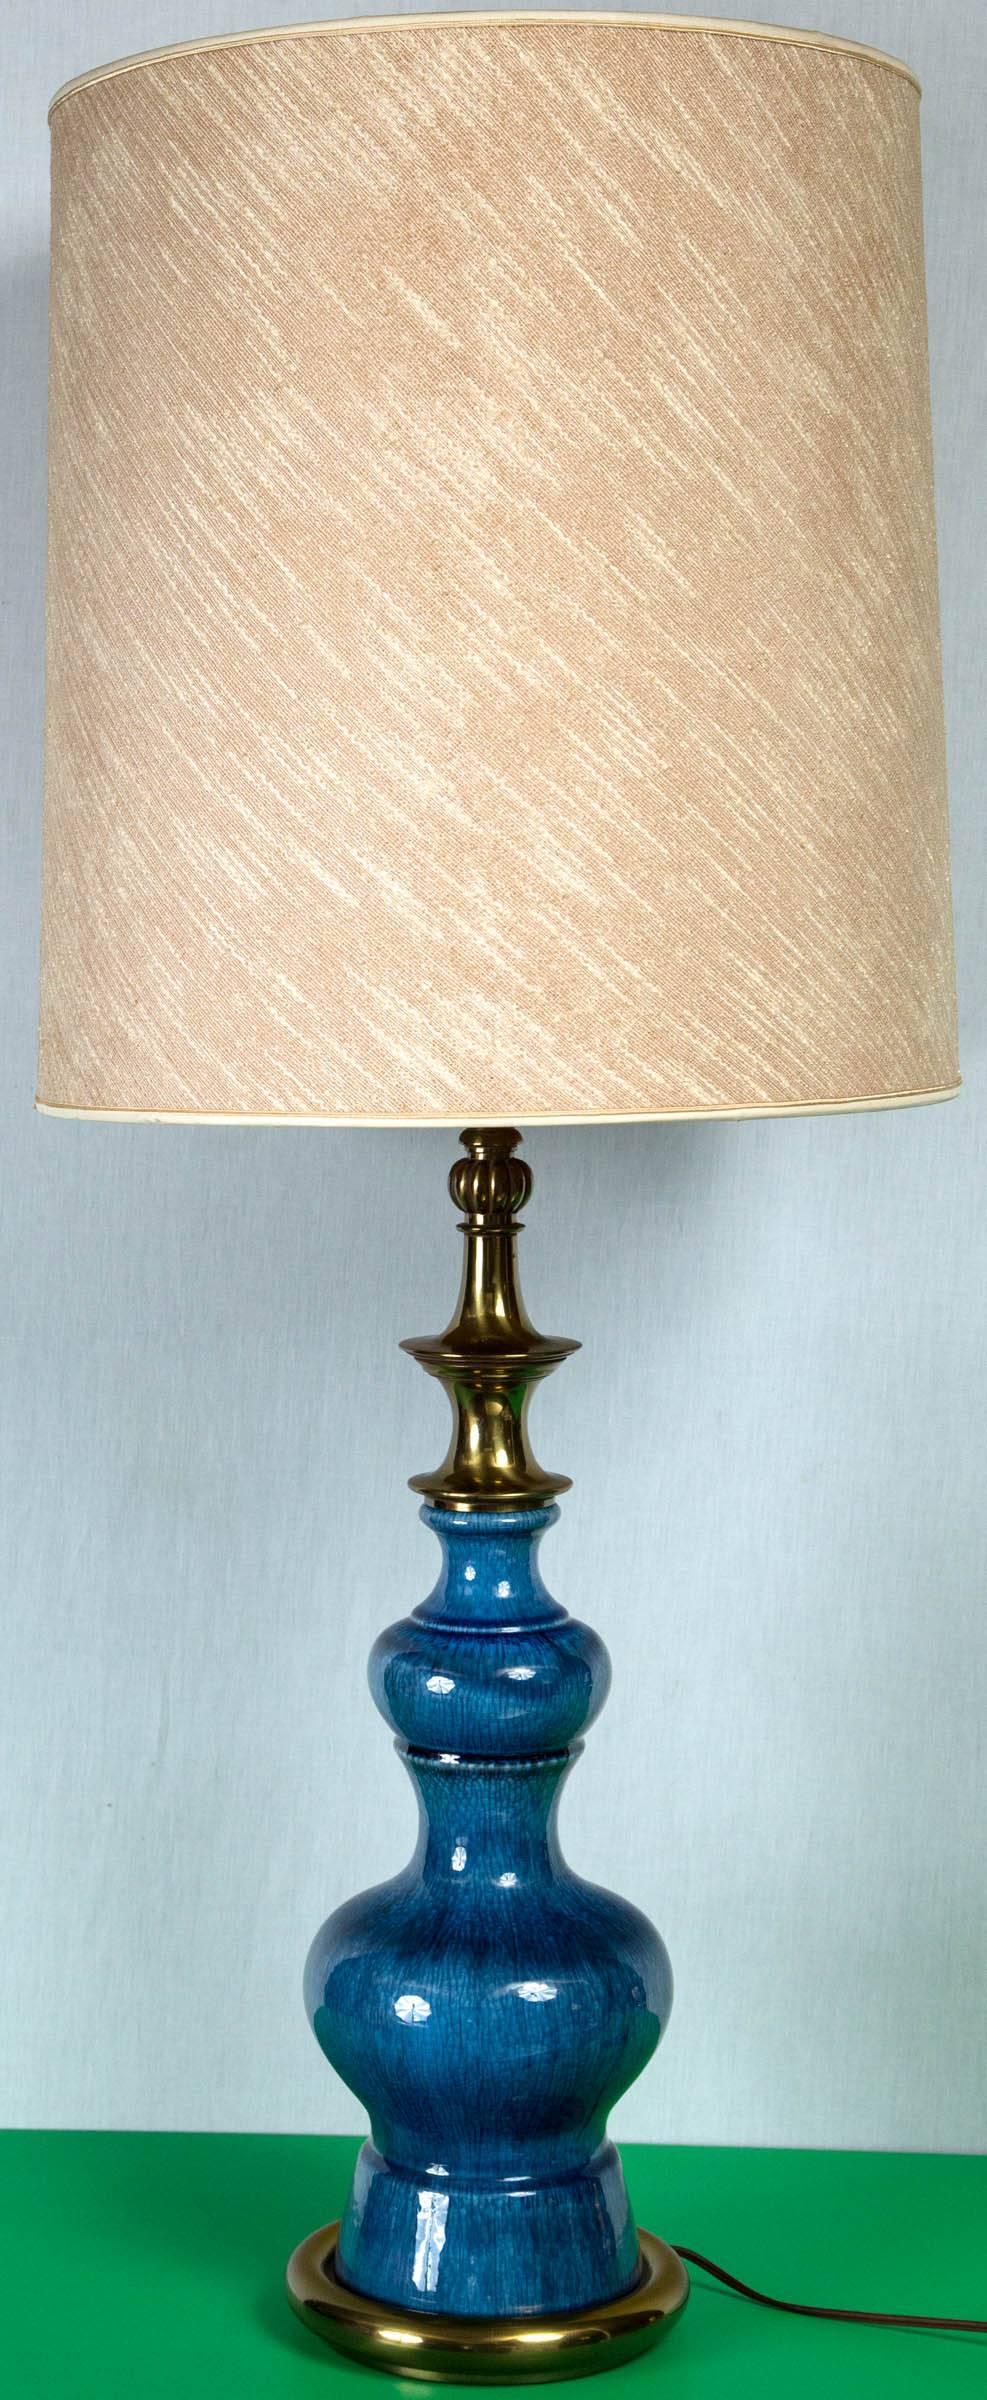 Pair of Midcentury Modern Blue Ceramic Stiffel Lamps with Original Shades 1